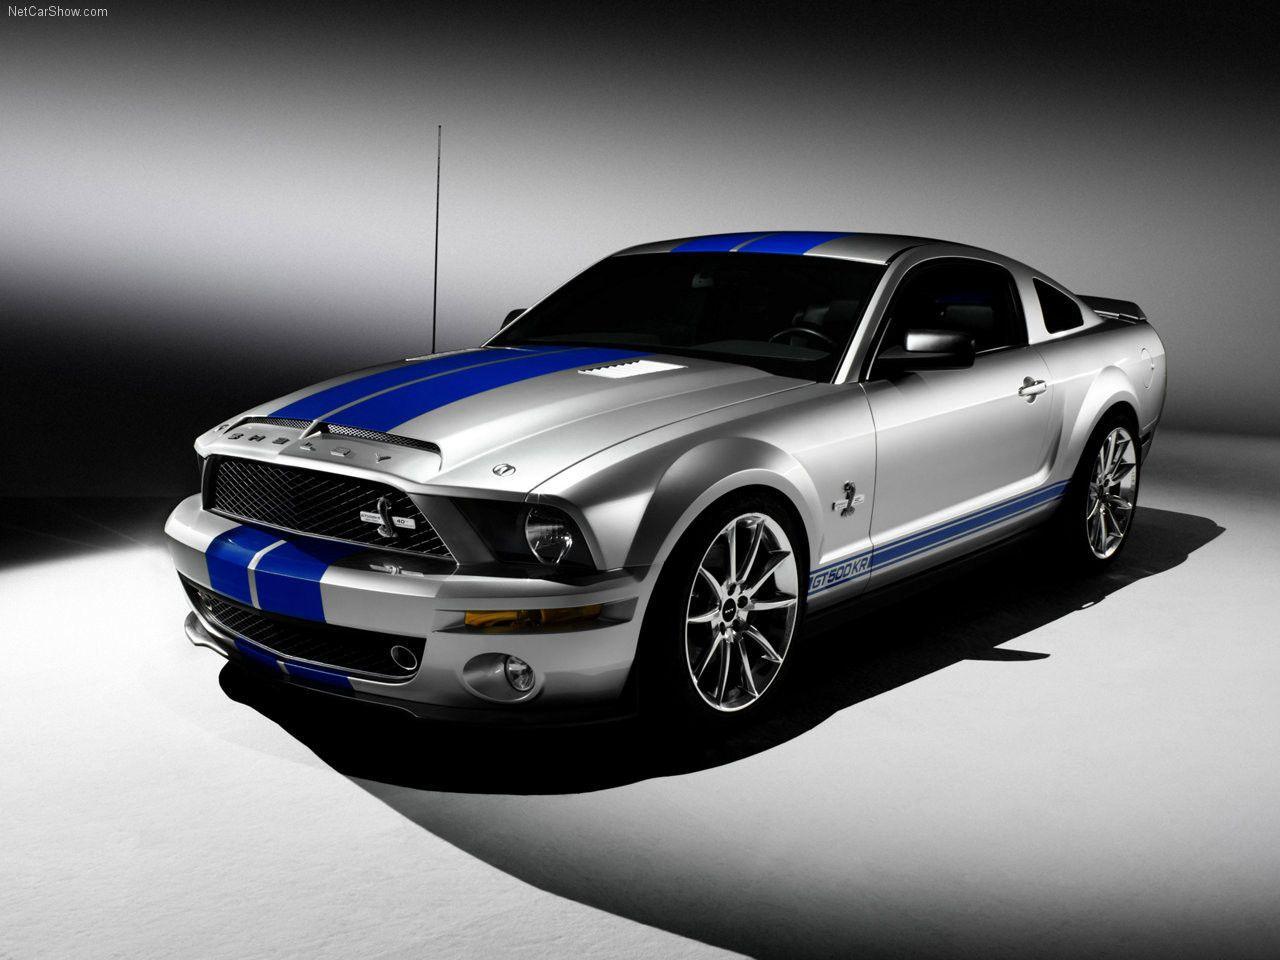 Mustang Gt Car Wallpaper Download